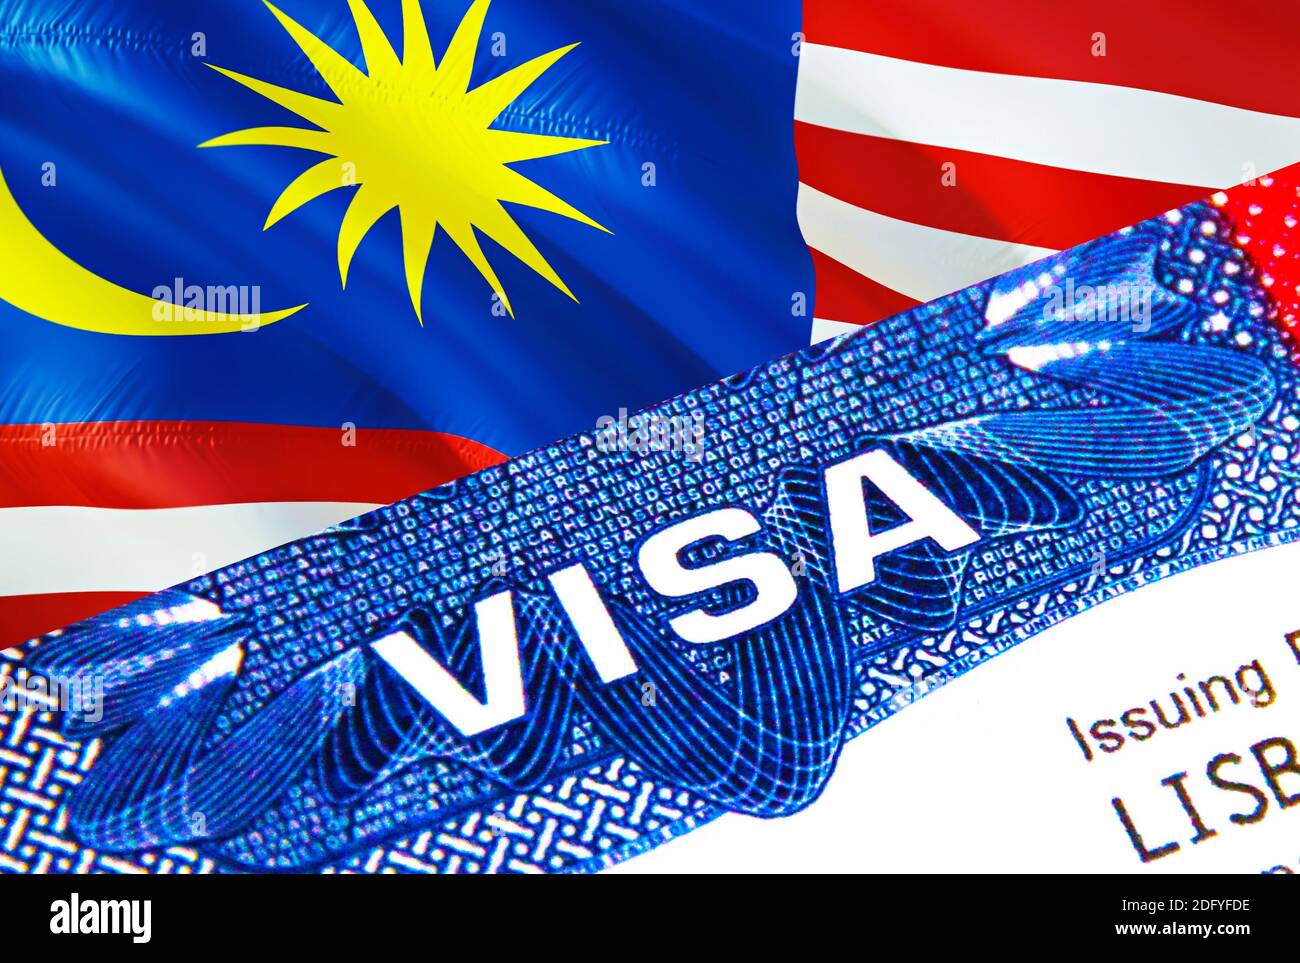 Malaysia Visa High Resolution Stock Photography And Images Alamy